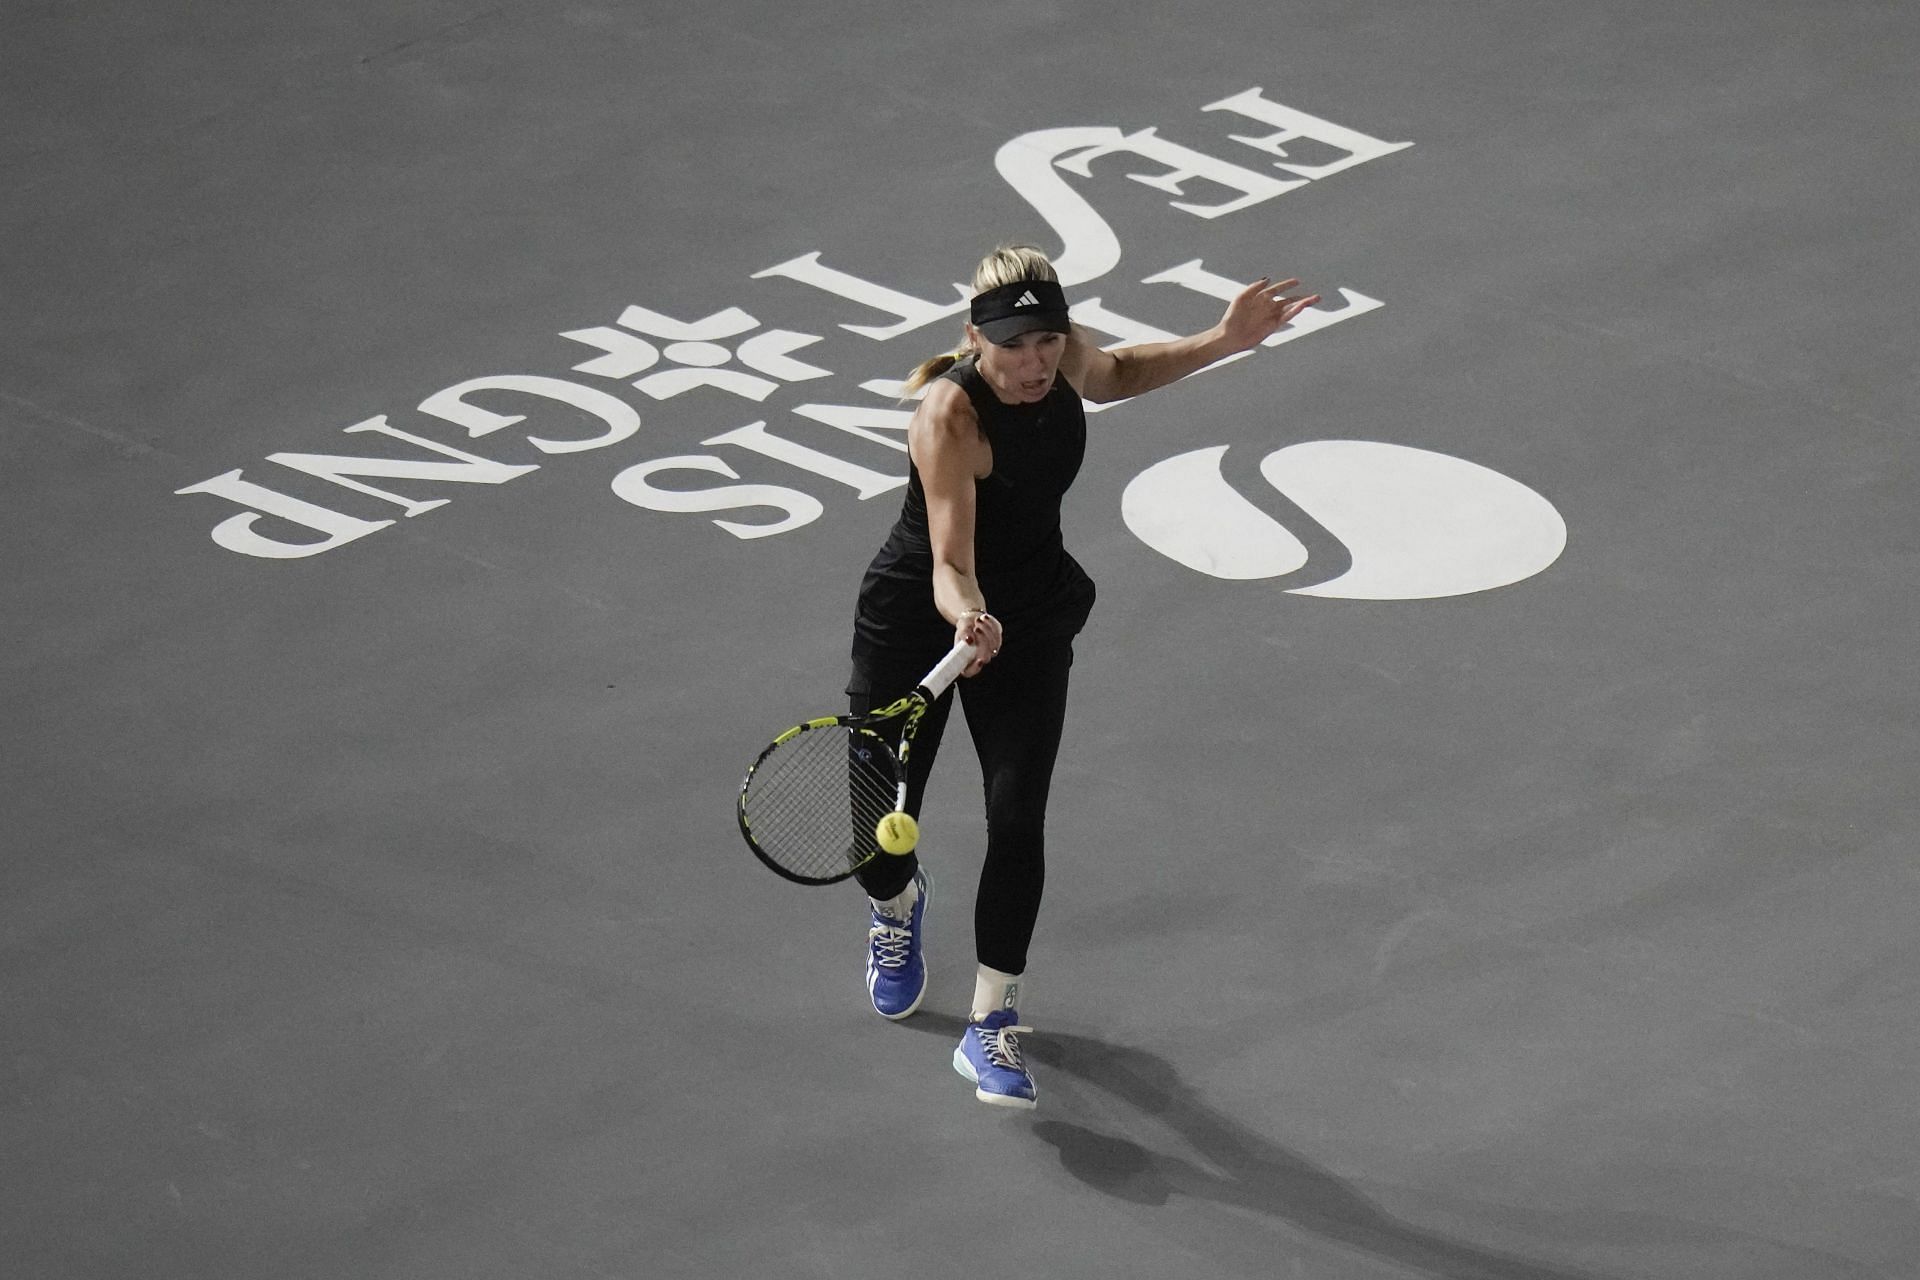 Caroline Wozniacki in action during her exhibition match against Maria Sakkari in Mexico